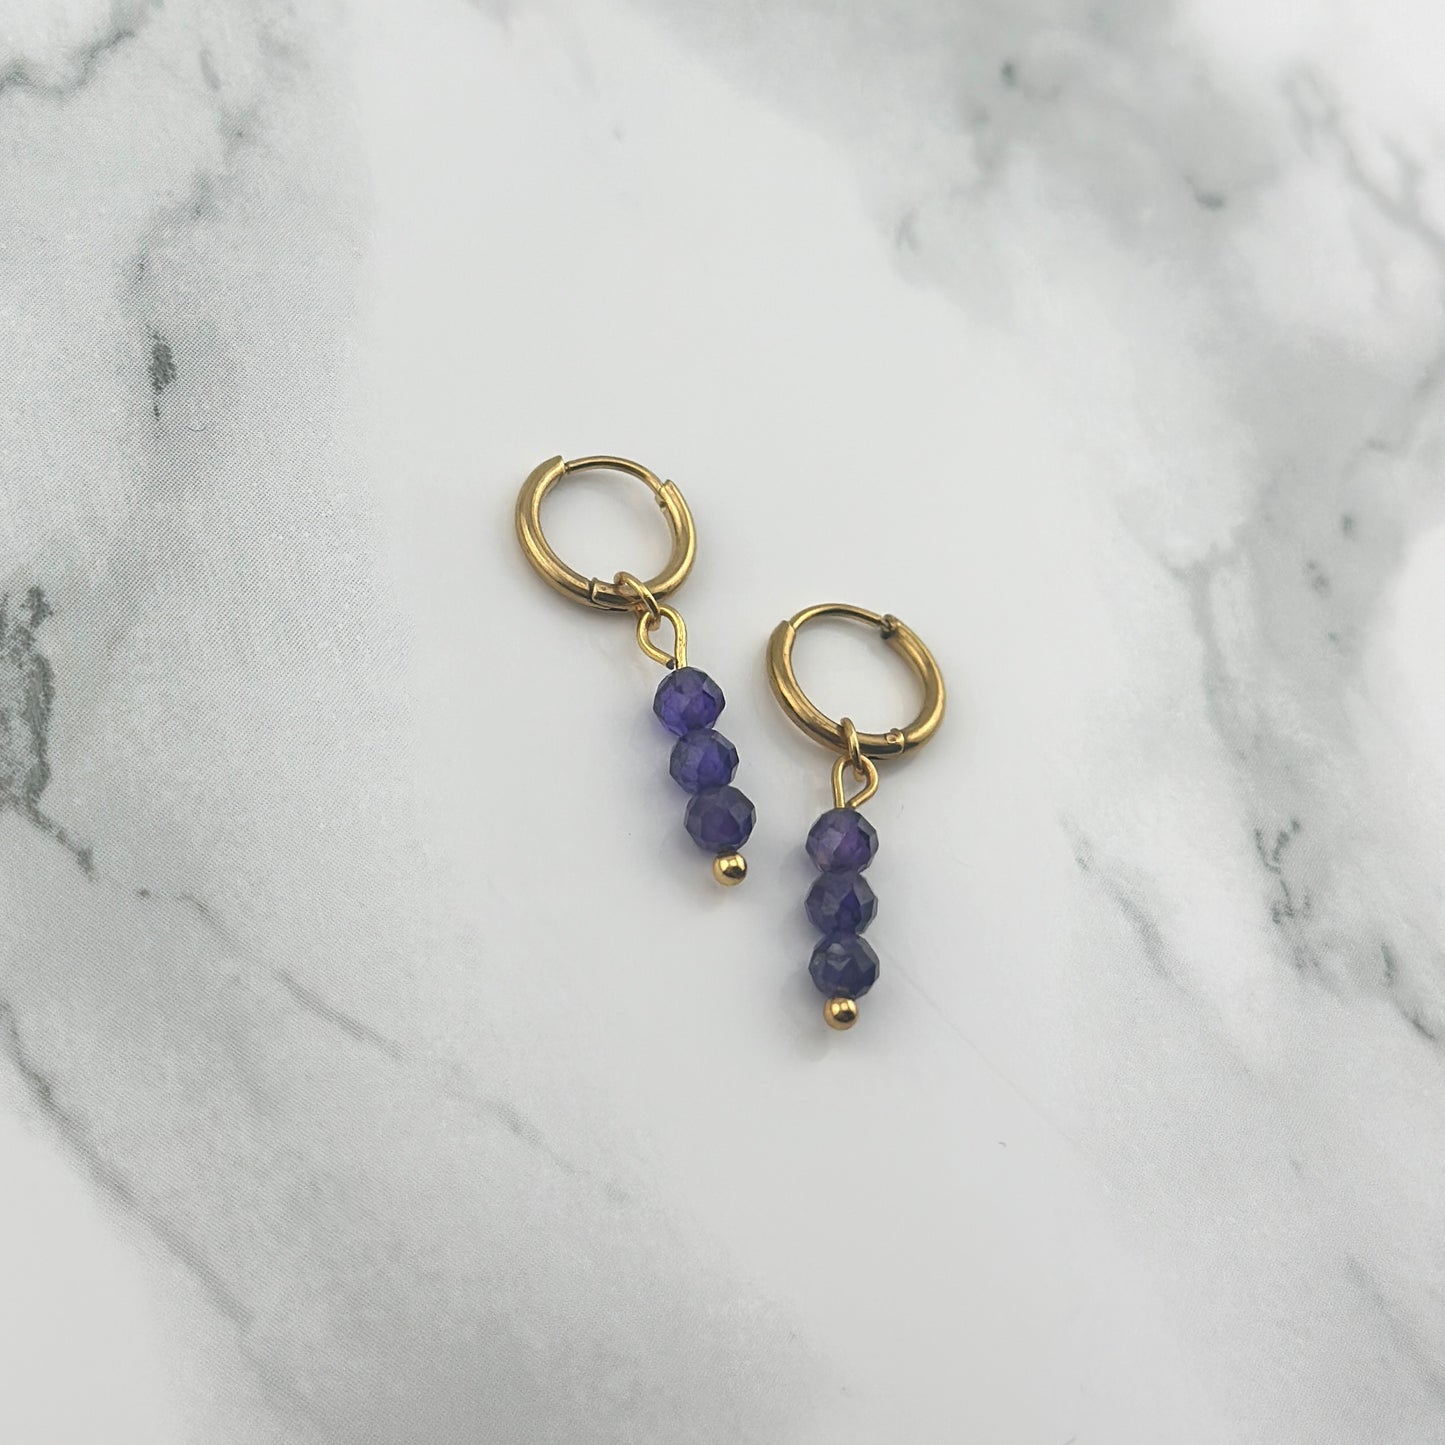 Tiny purple beads Hoops